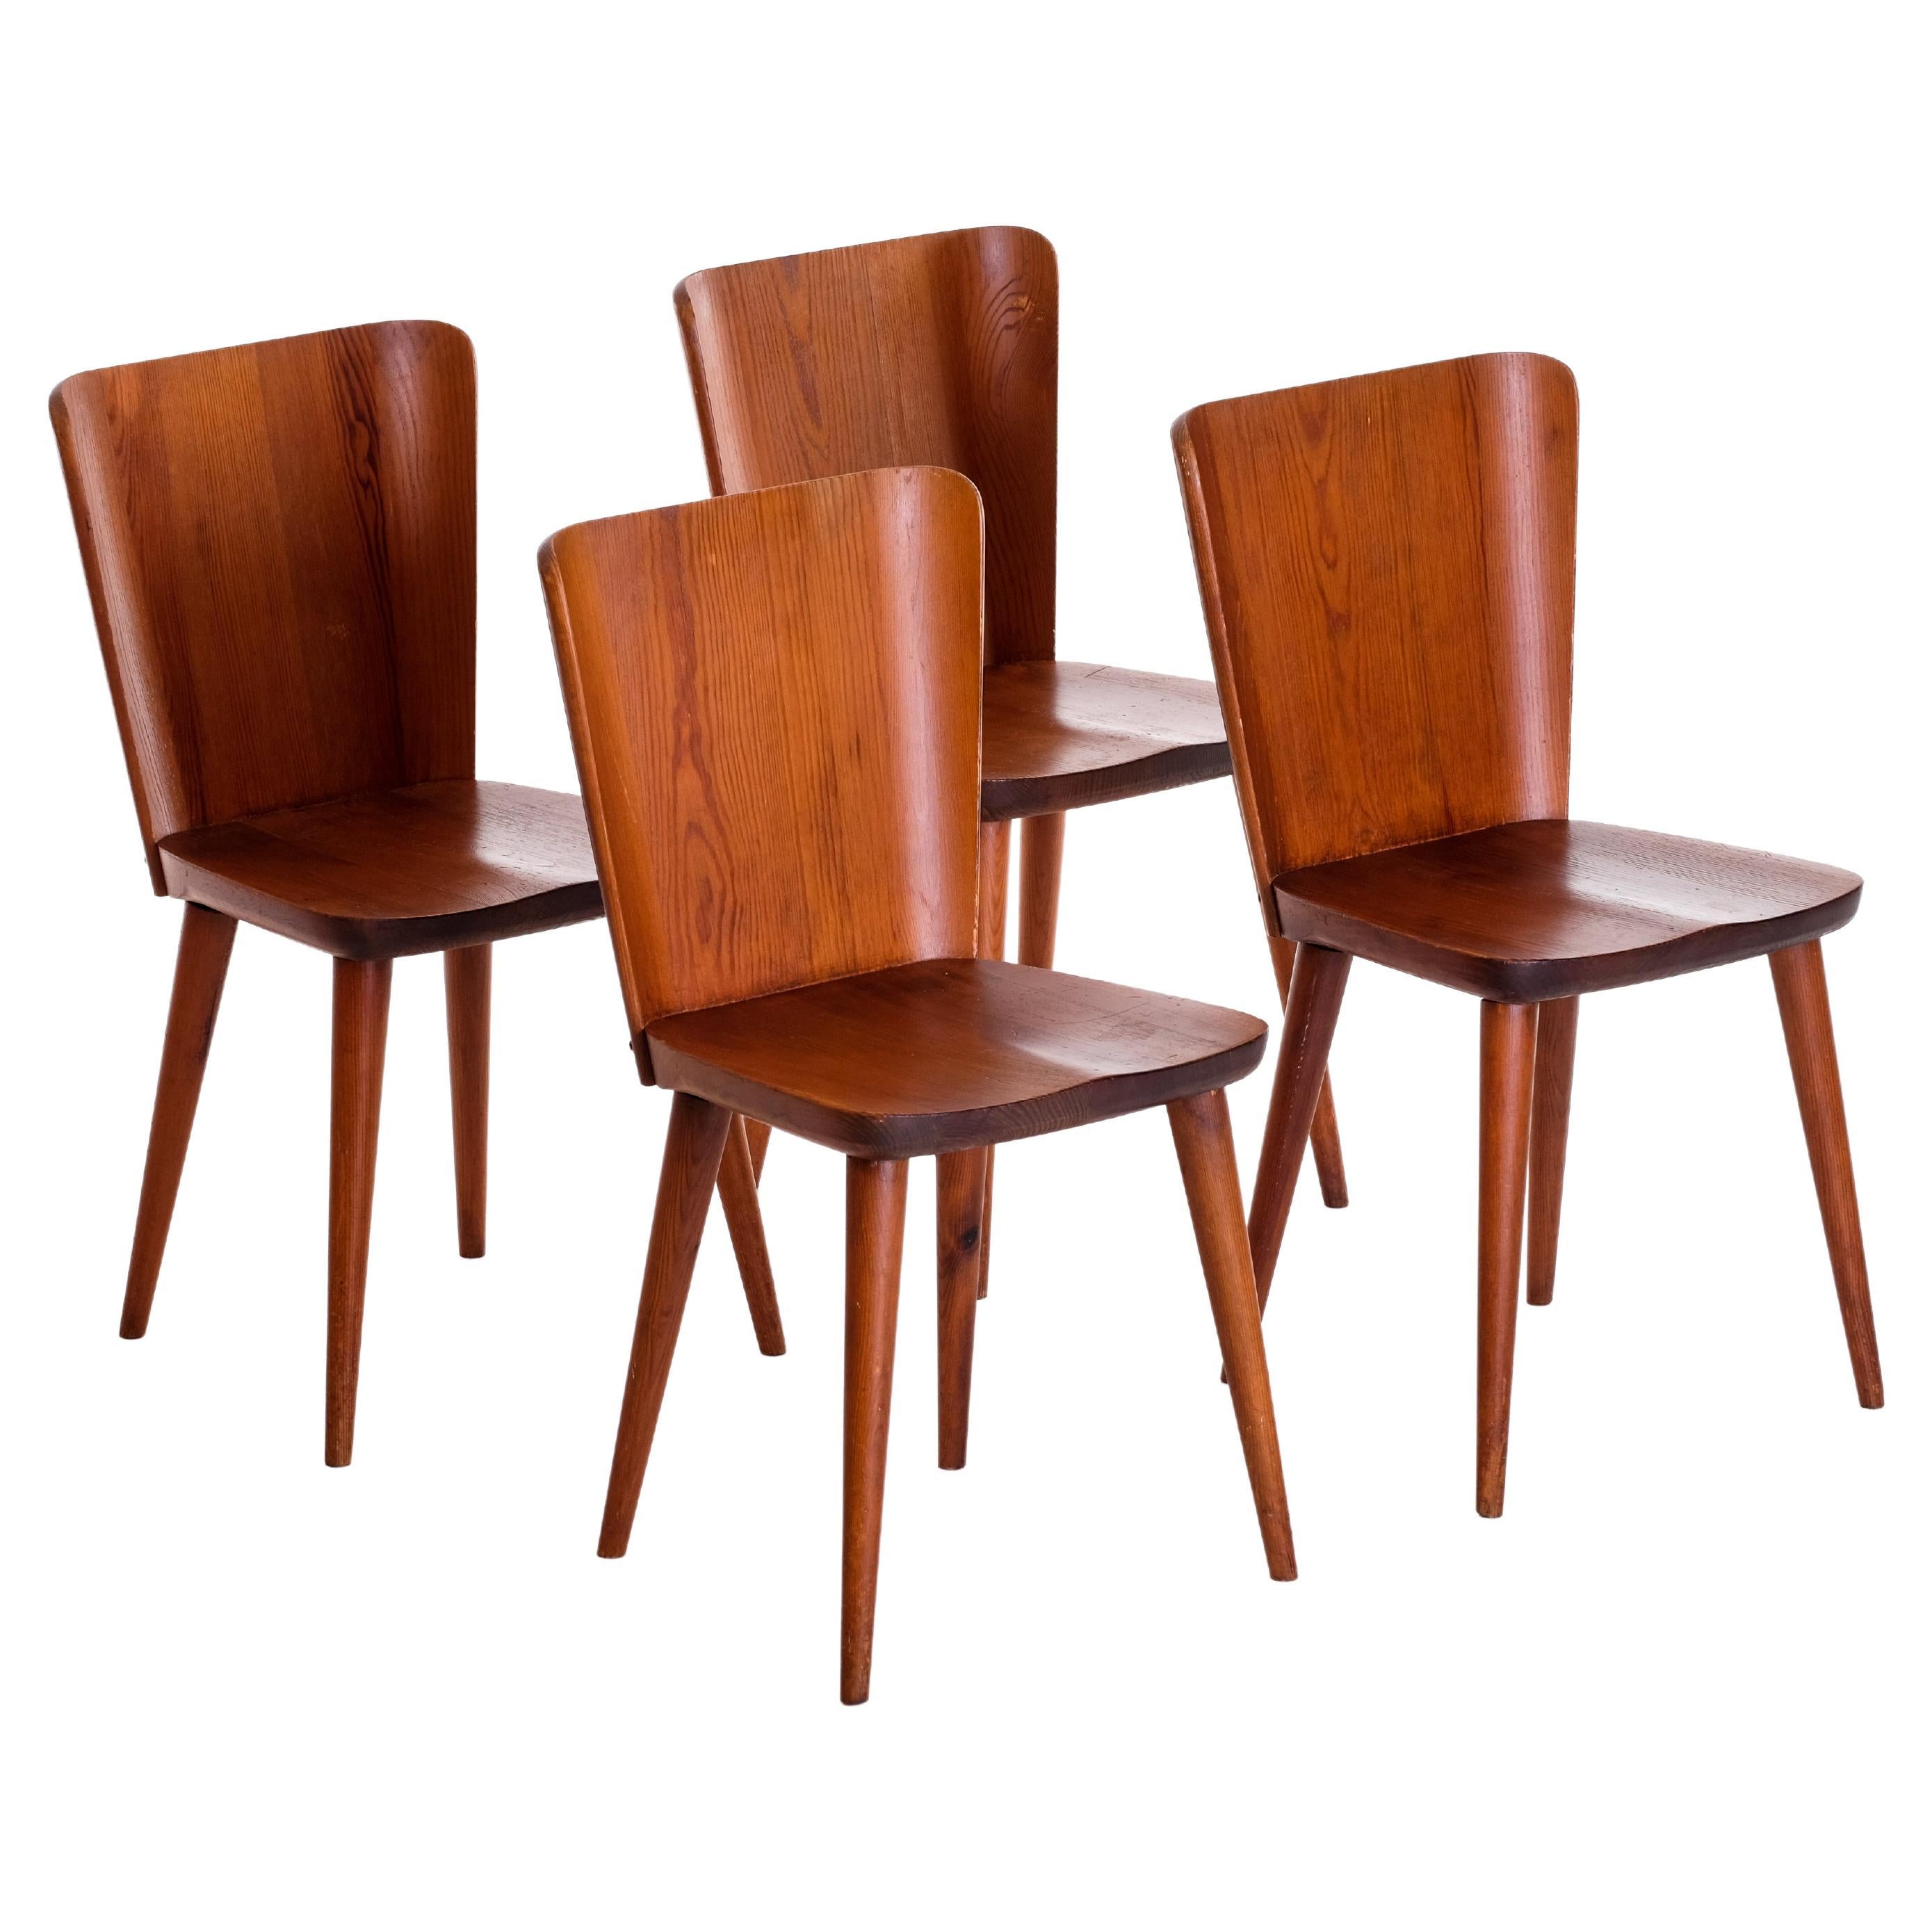 Set of 4 Swedish Pine Chairs by Göran Malmvall, Svensk Fur, 1960s For Sale